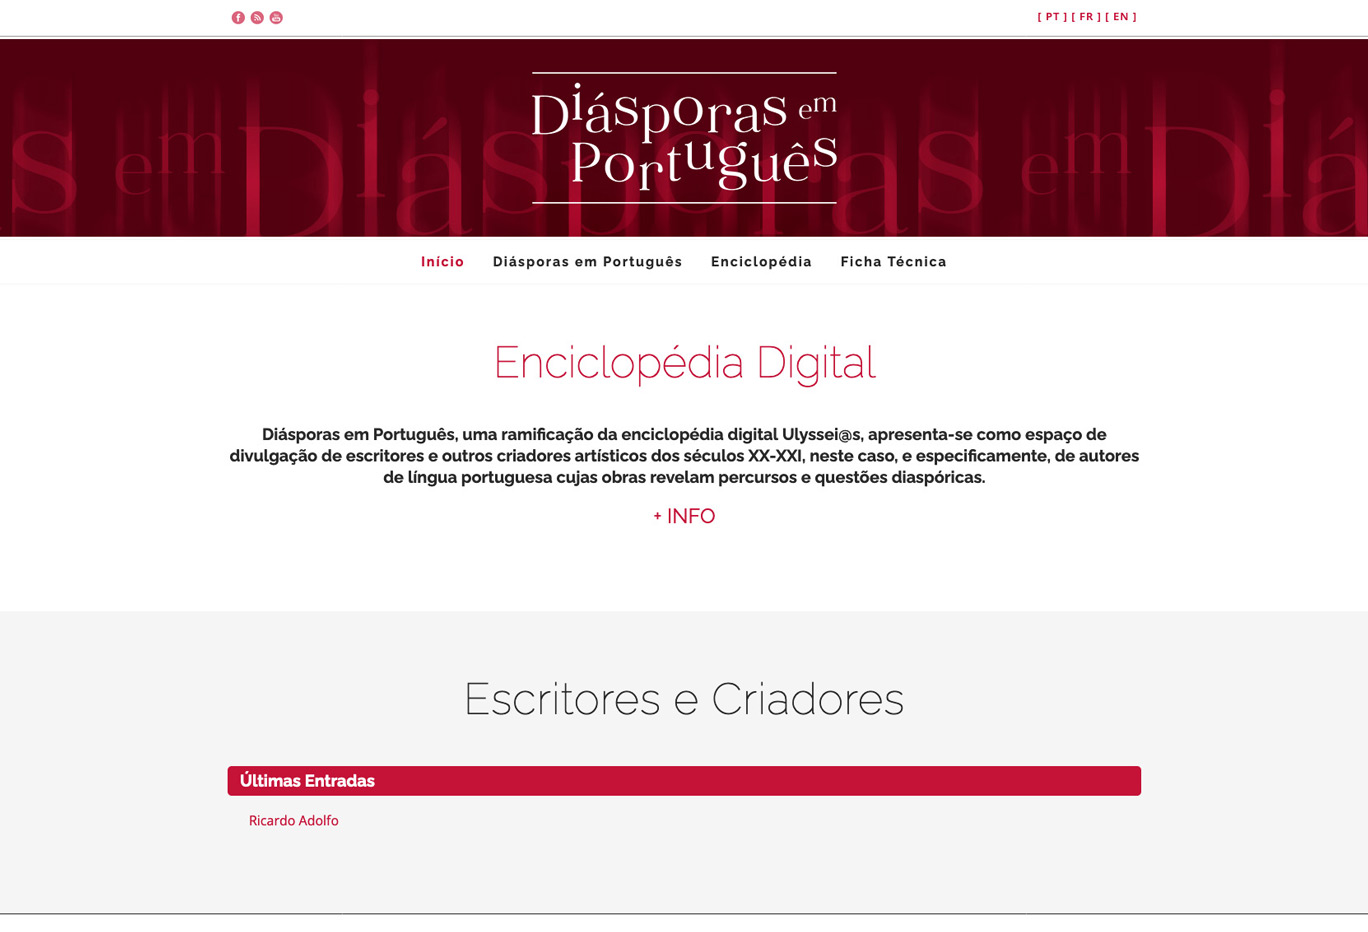 Print_Diasporas